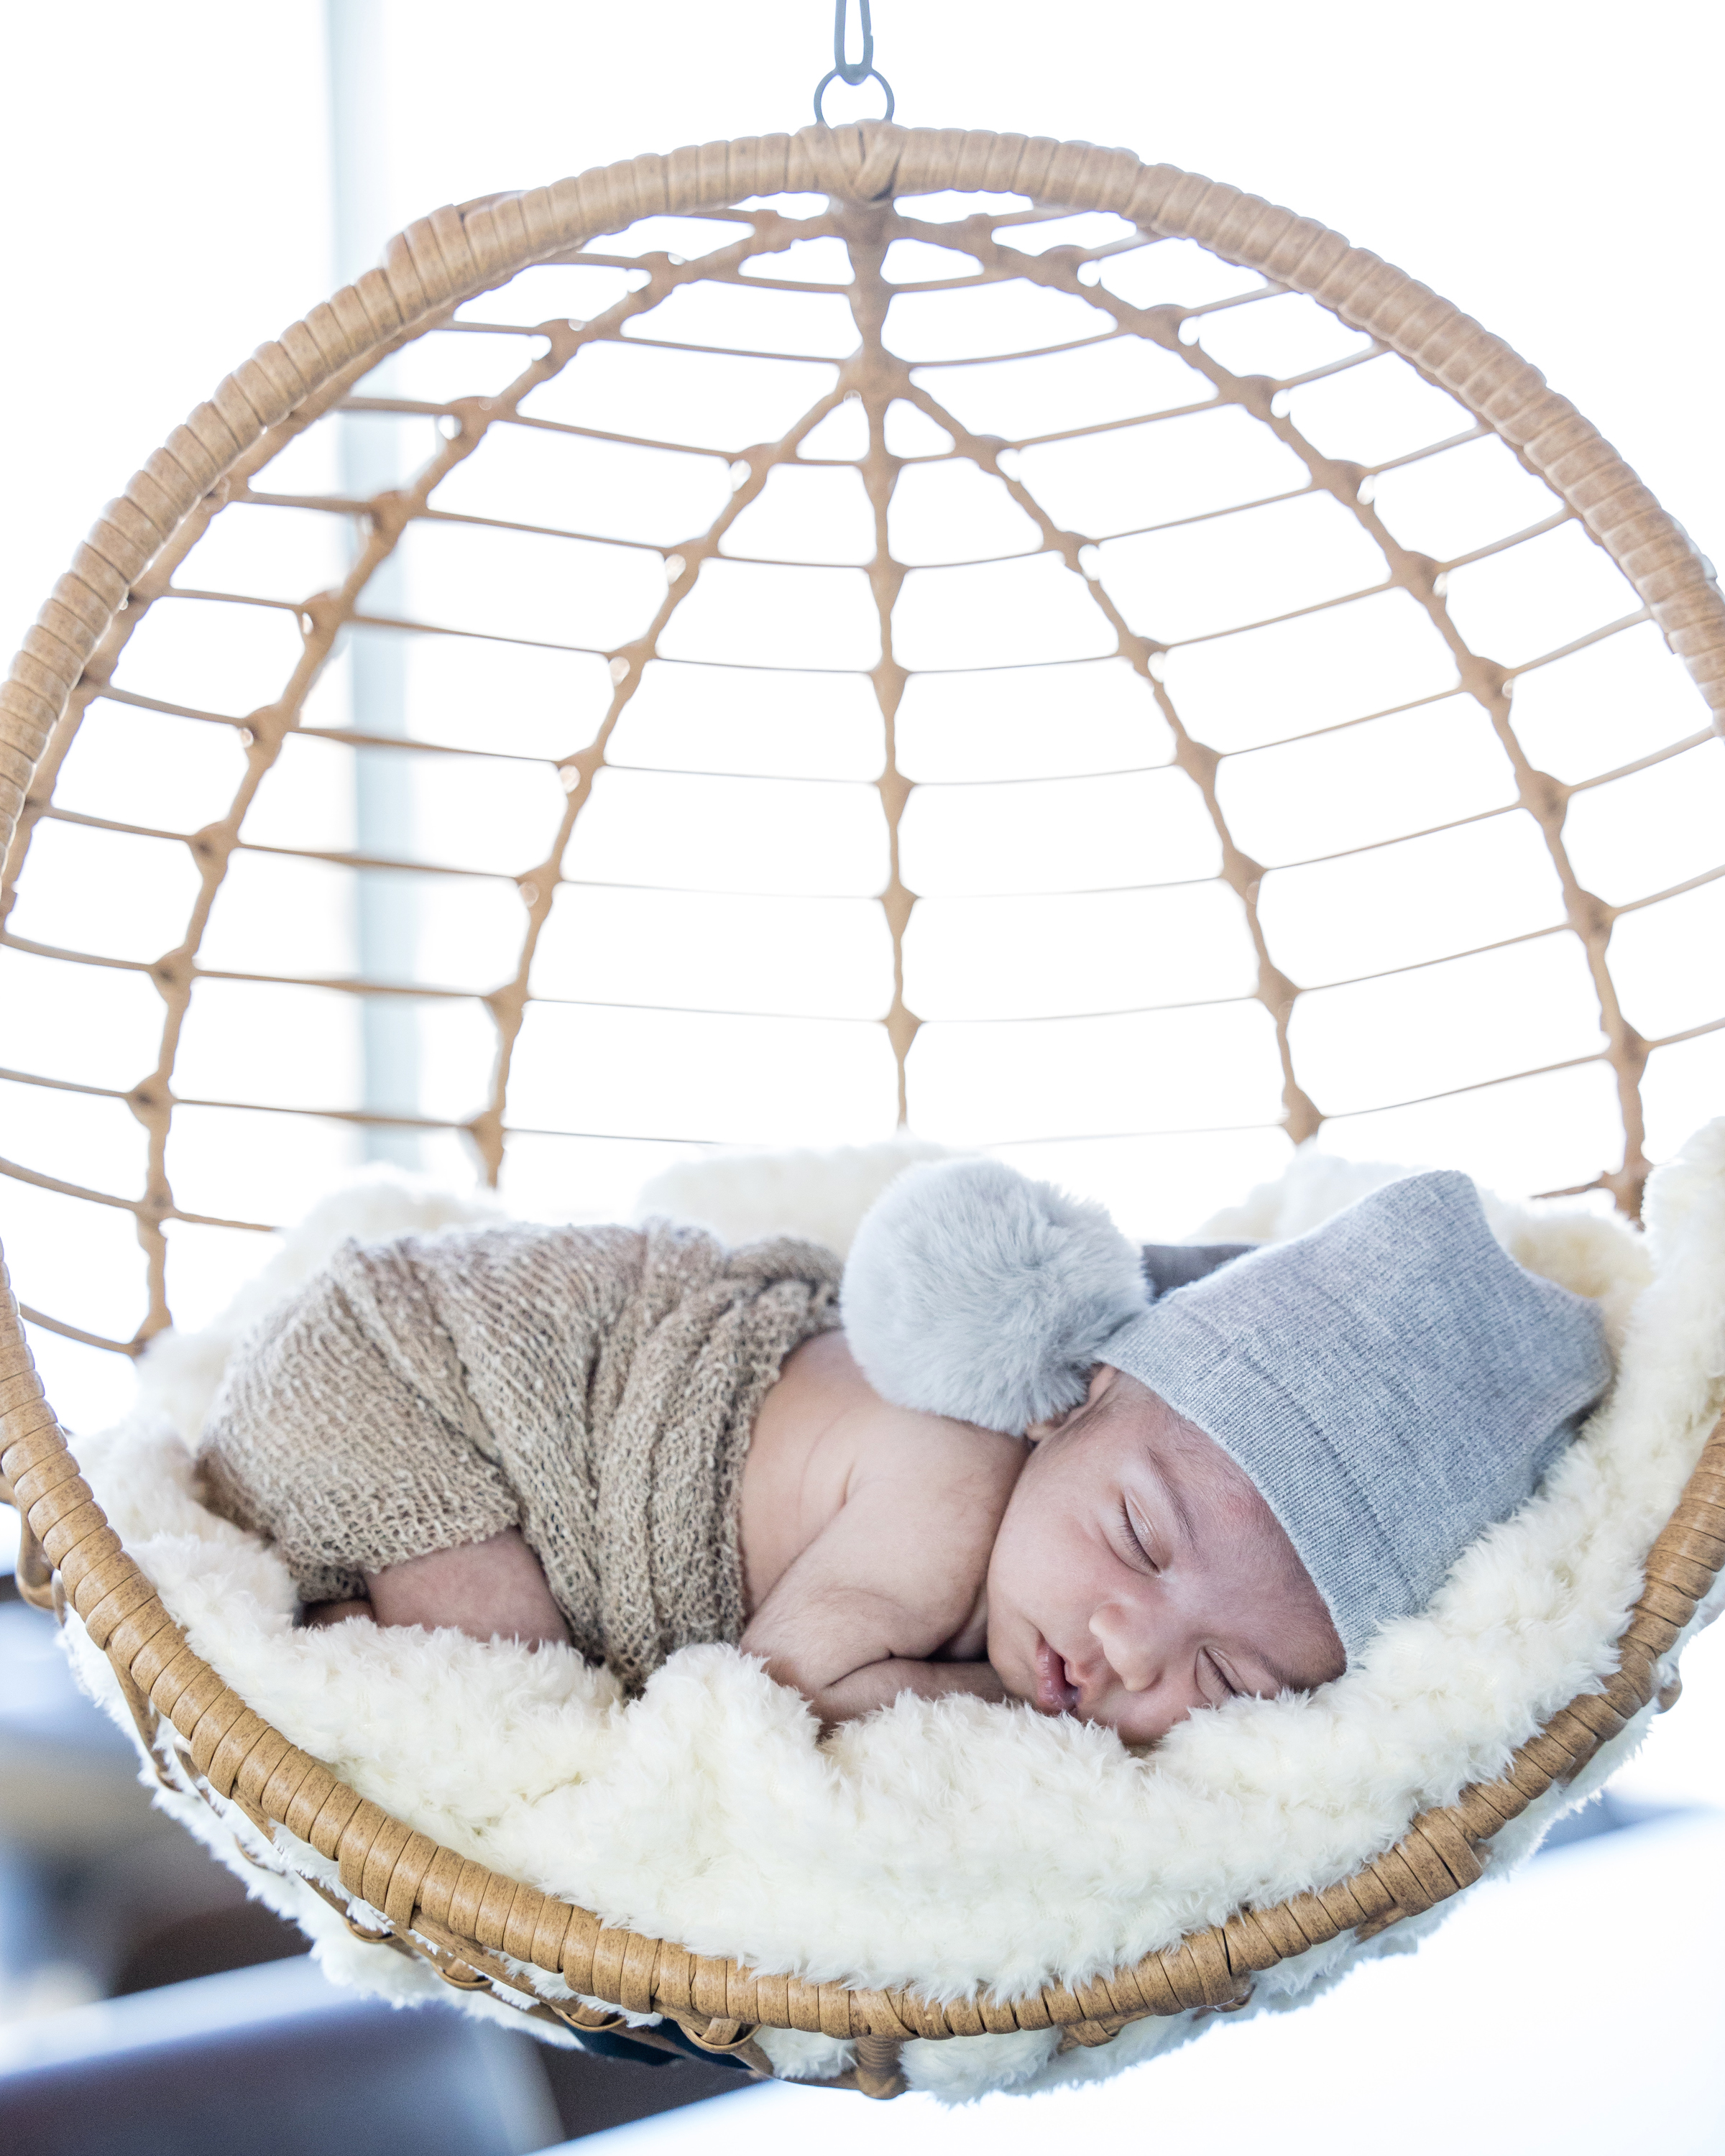 Newborn Sleeping Baby portrait Photography